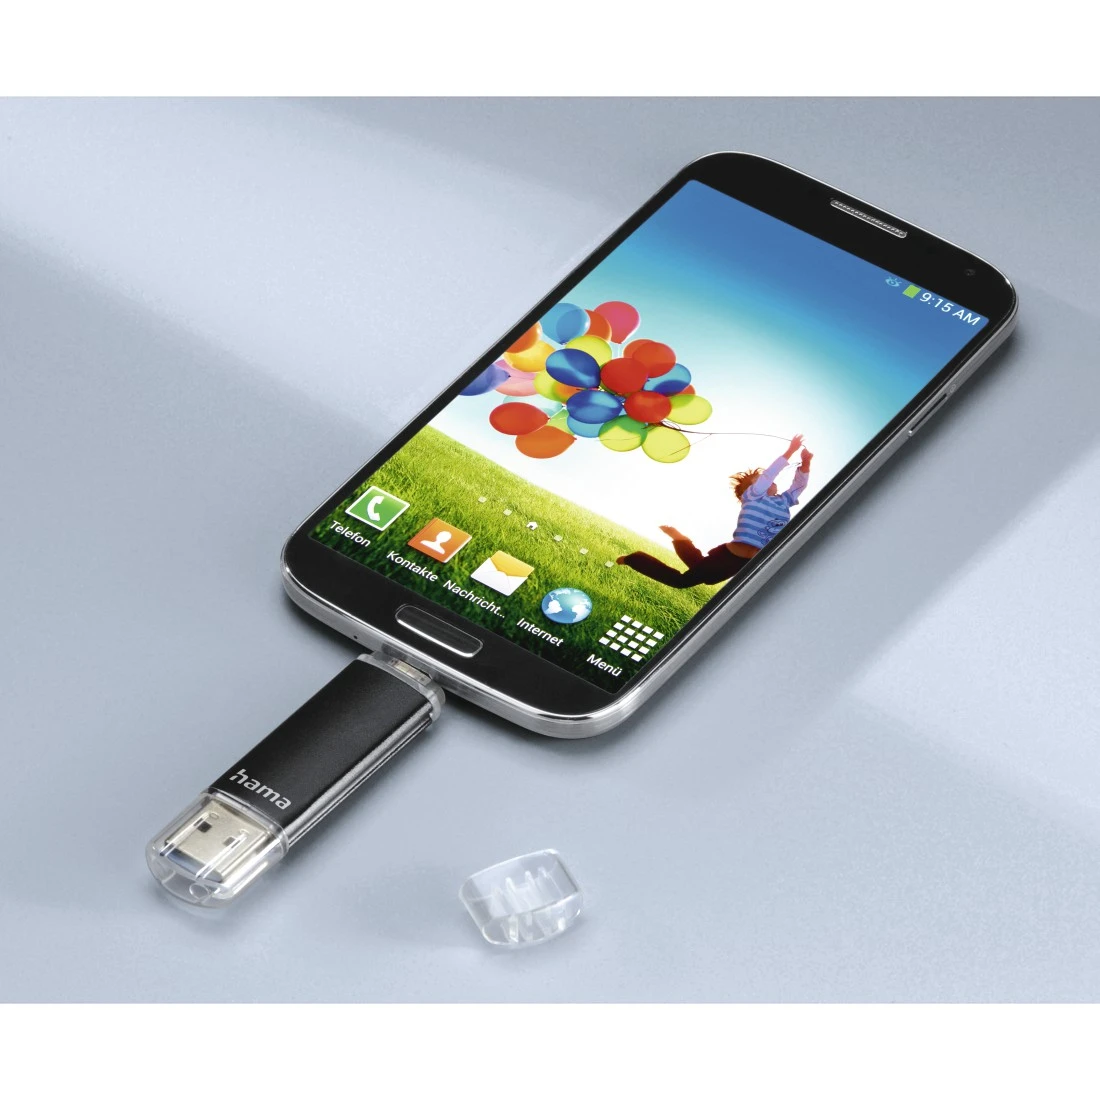 USB-Stick "Laeta Twin", USB 3.0, 16 GB, 40MB/s, Schwarz | Hama